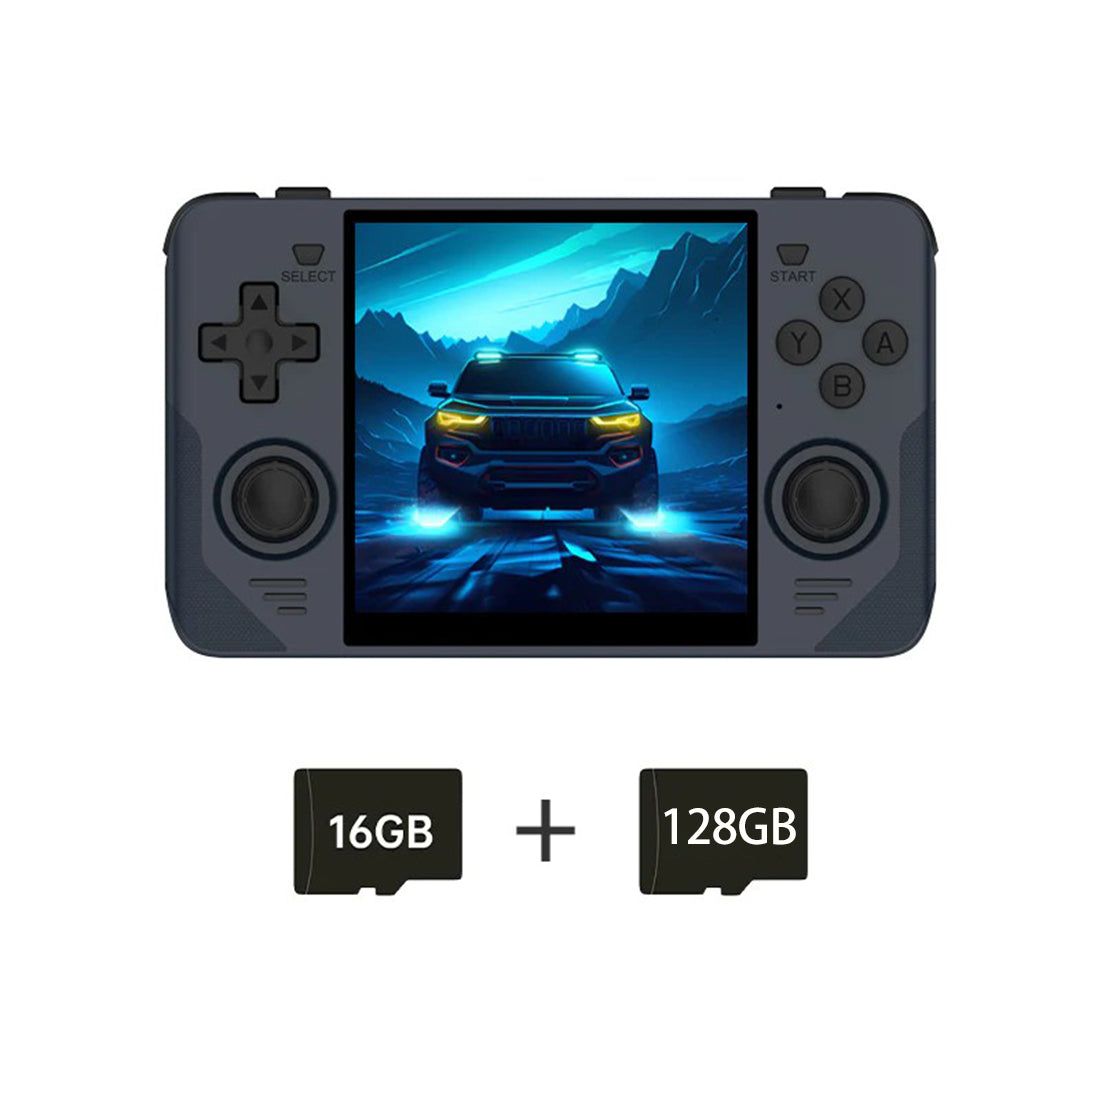 litnxt-powkiddy-rgb30-4-inch-handheld-game-console-blue-16gb_128gb-1100x1100